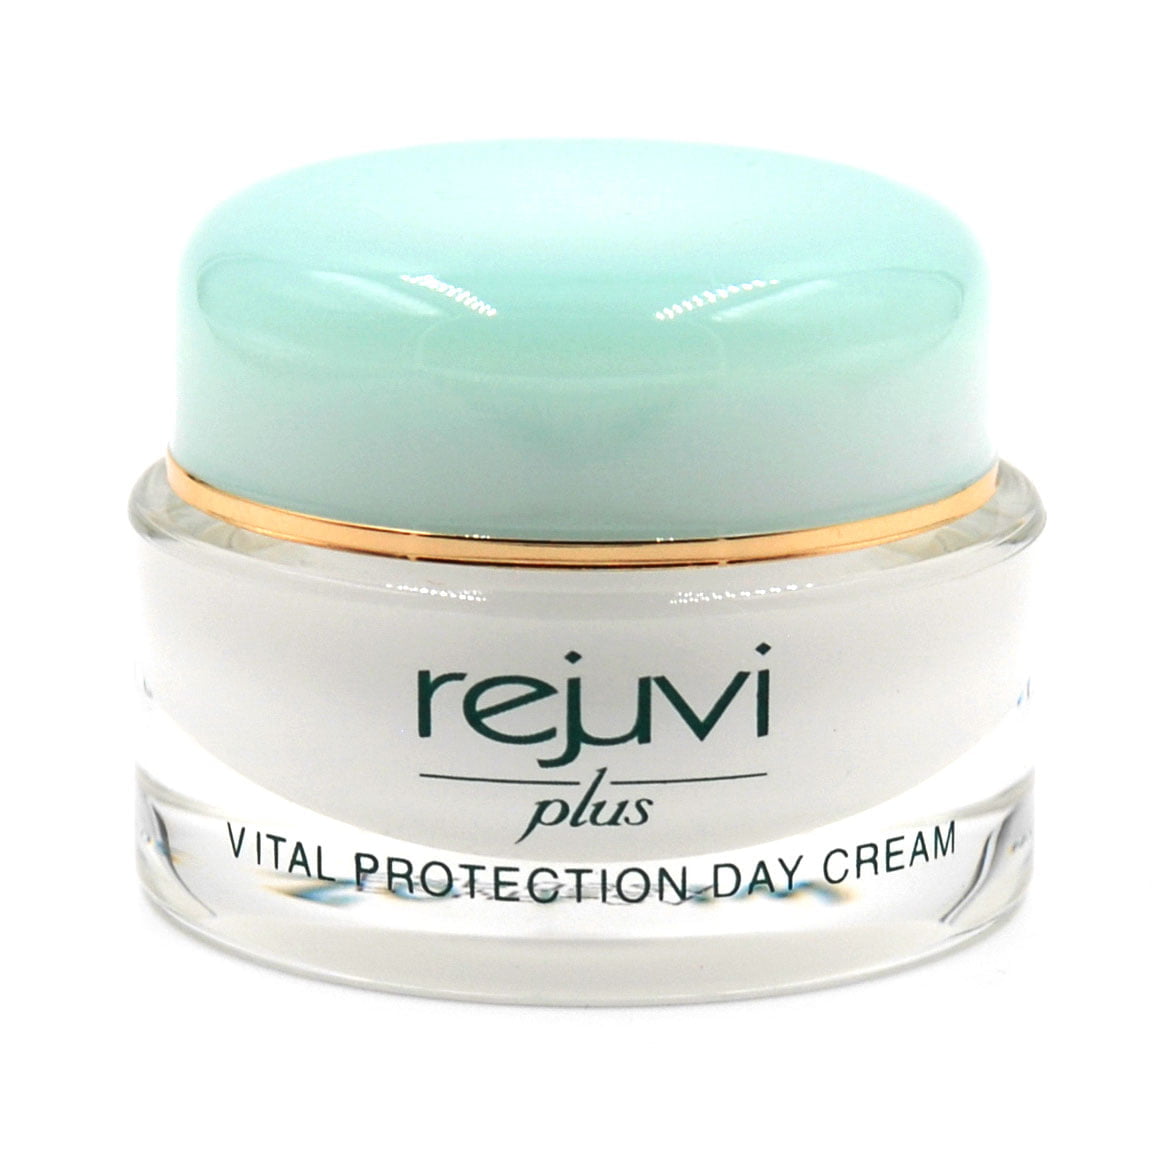 Rejuvi Plus Vital Protection Day Cream 1 oz/29g